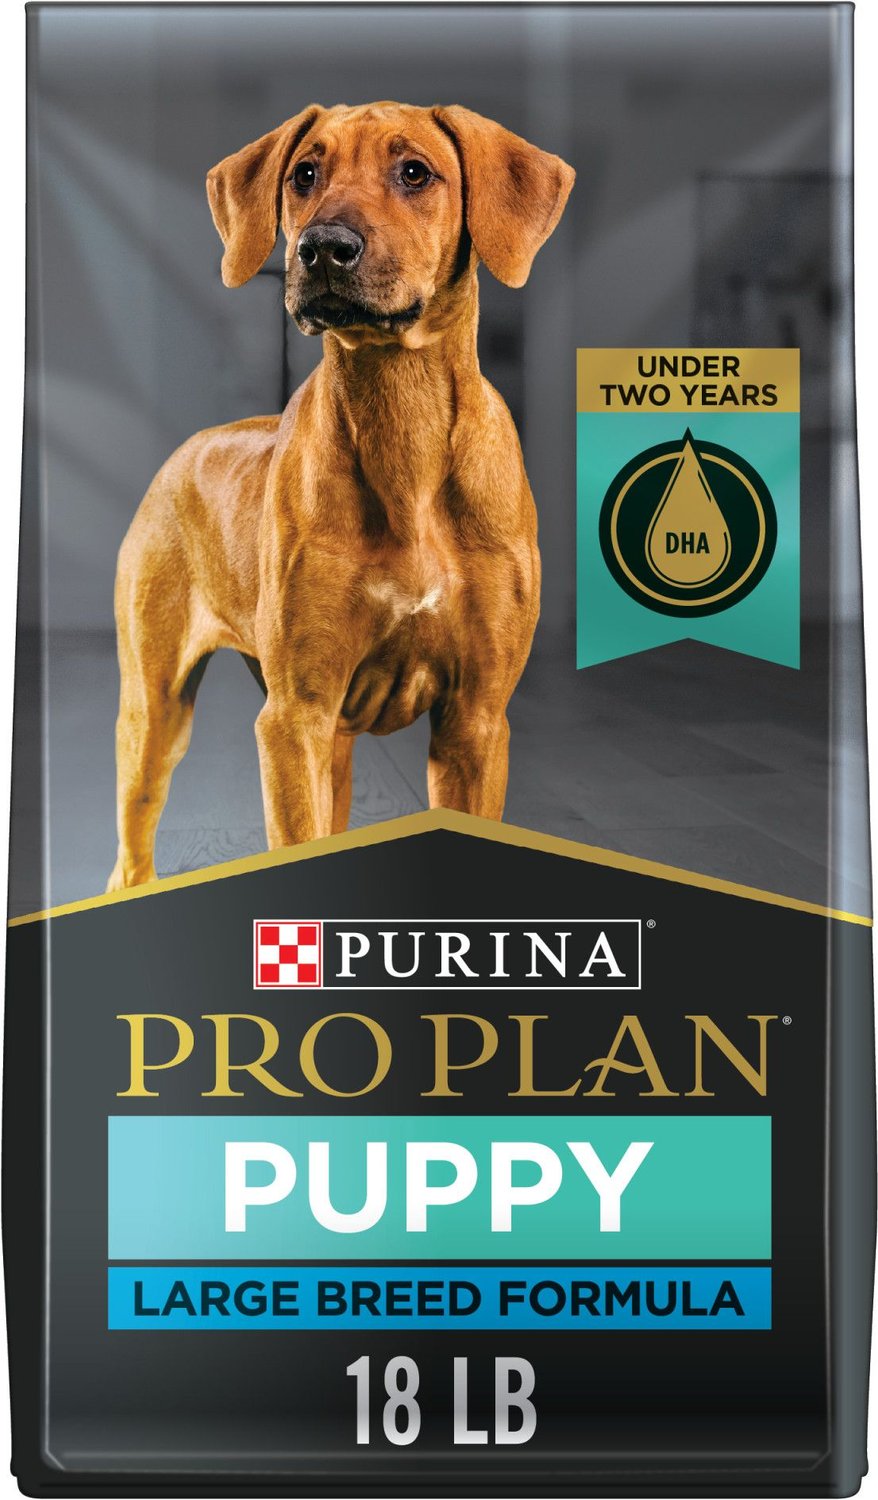 Purina Pro Plan Puppy Food Feeding Chart